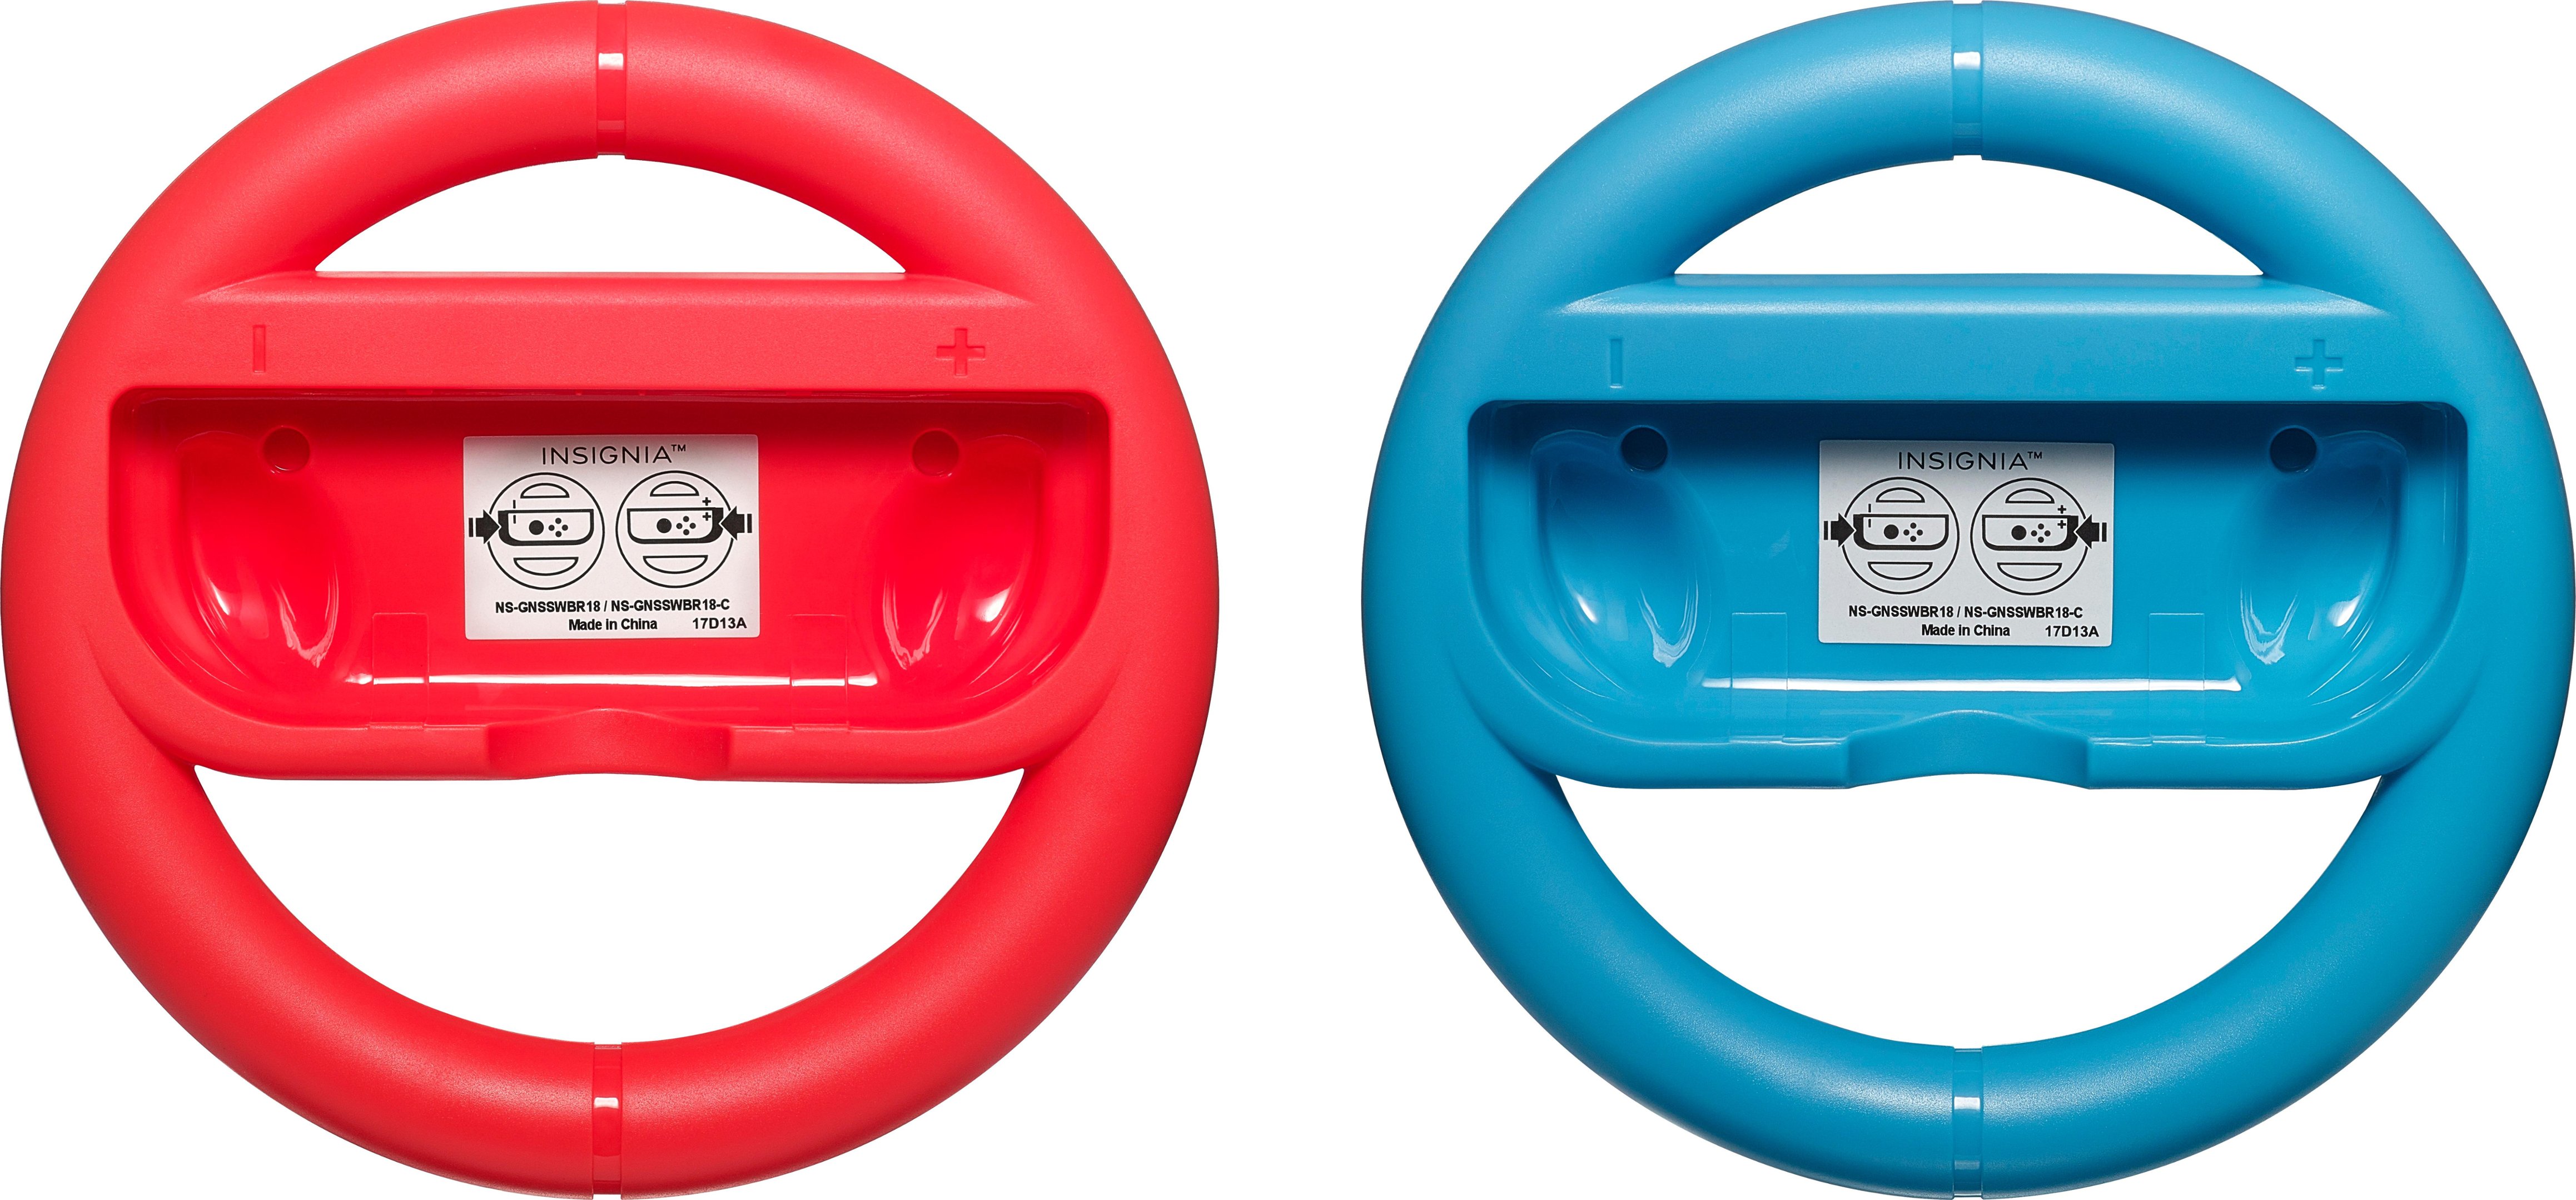 Wheel Nintendo Neon Insignia™ Blue Buy: for NS-GNSSWBR18 red/Neon (2-Pack) Best Joy-Con Switch